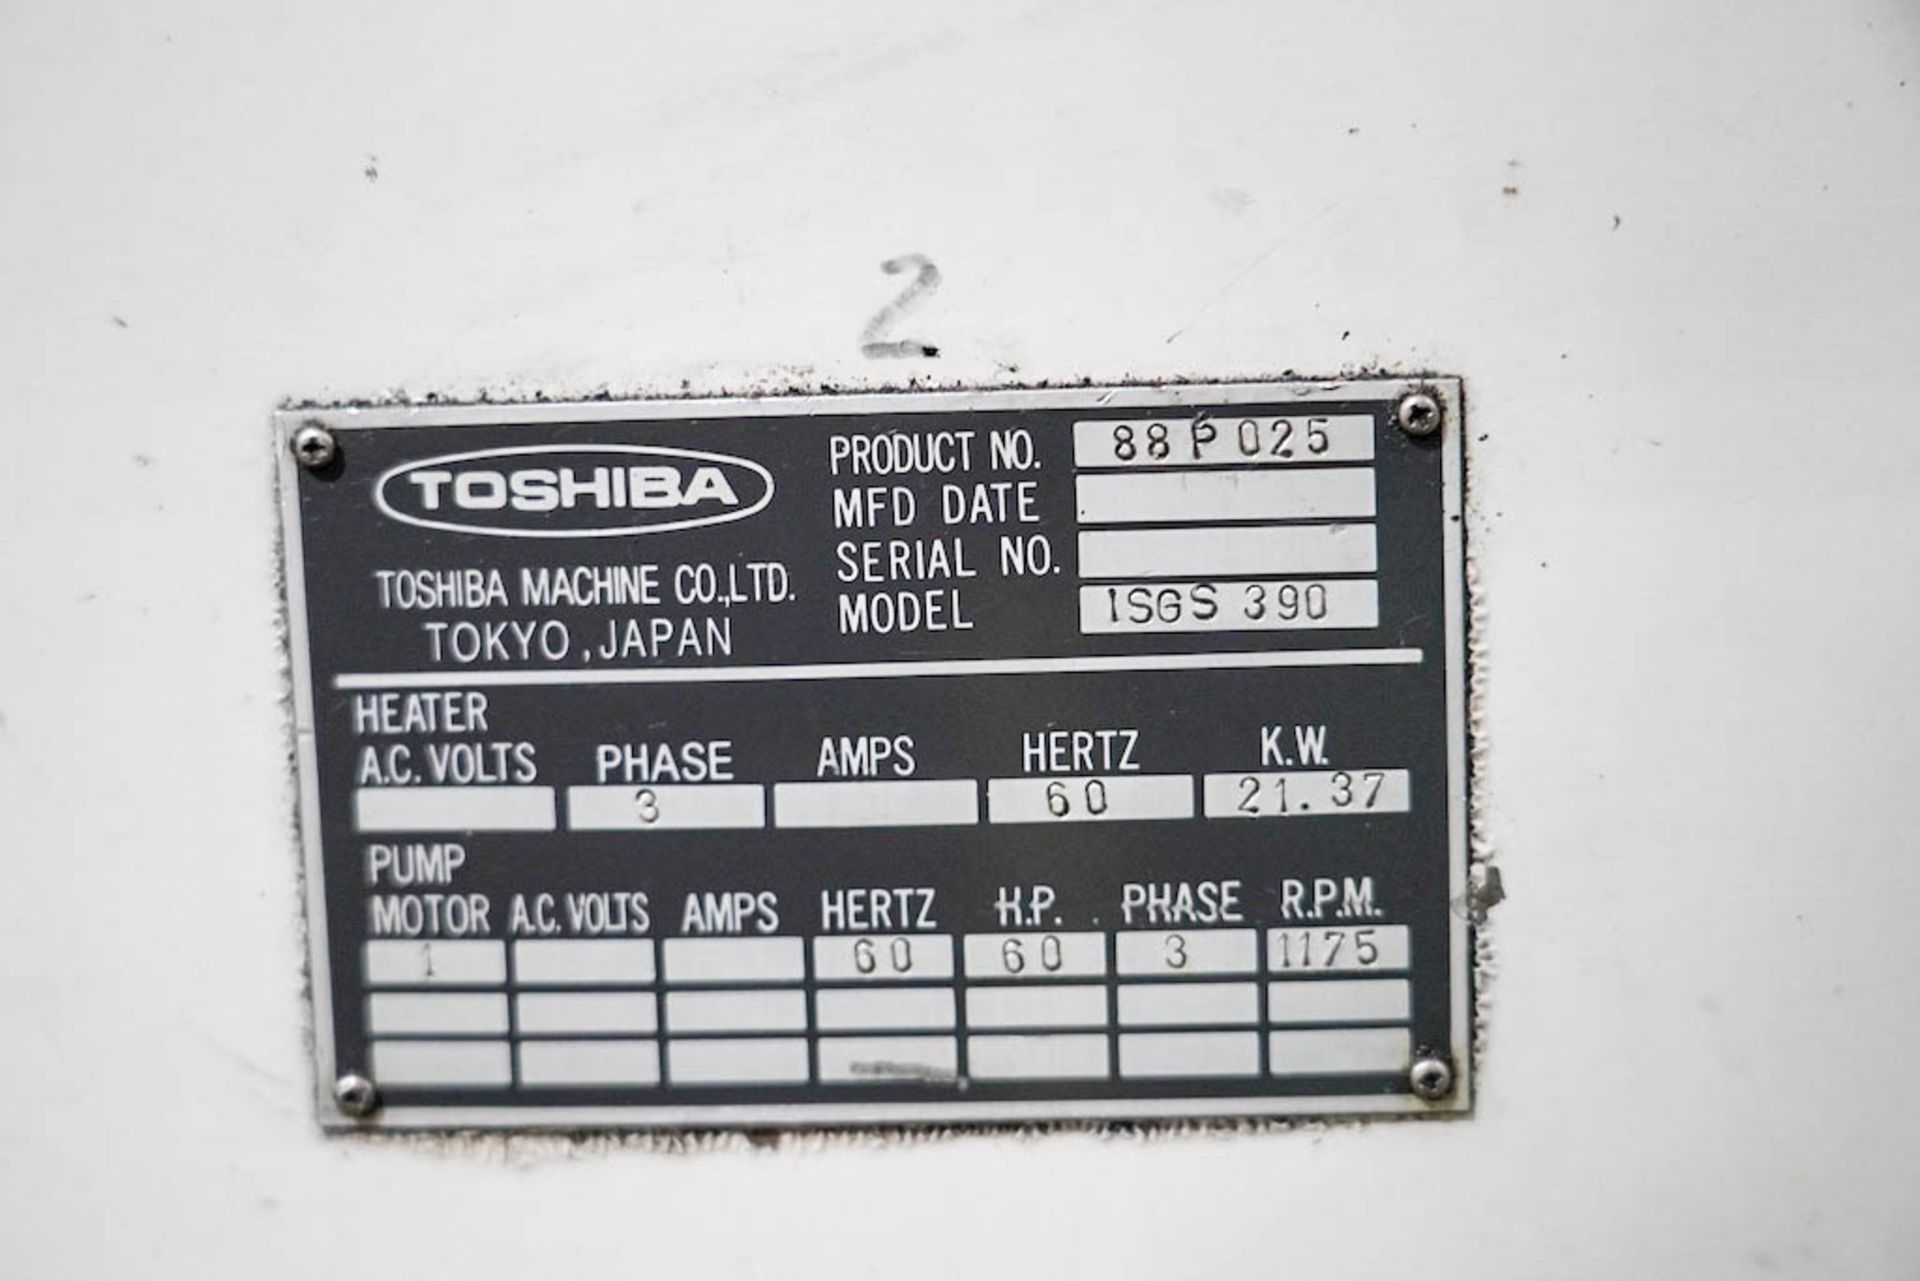 Toshiba 390 Ton Injection Molding Press - Image 7 of 8